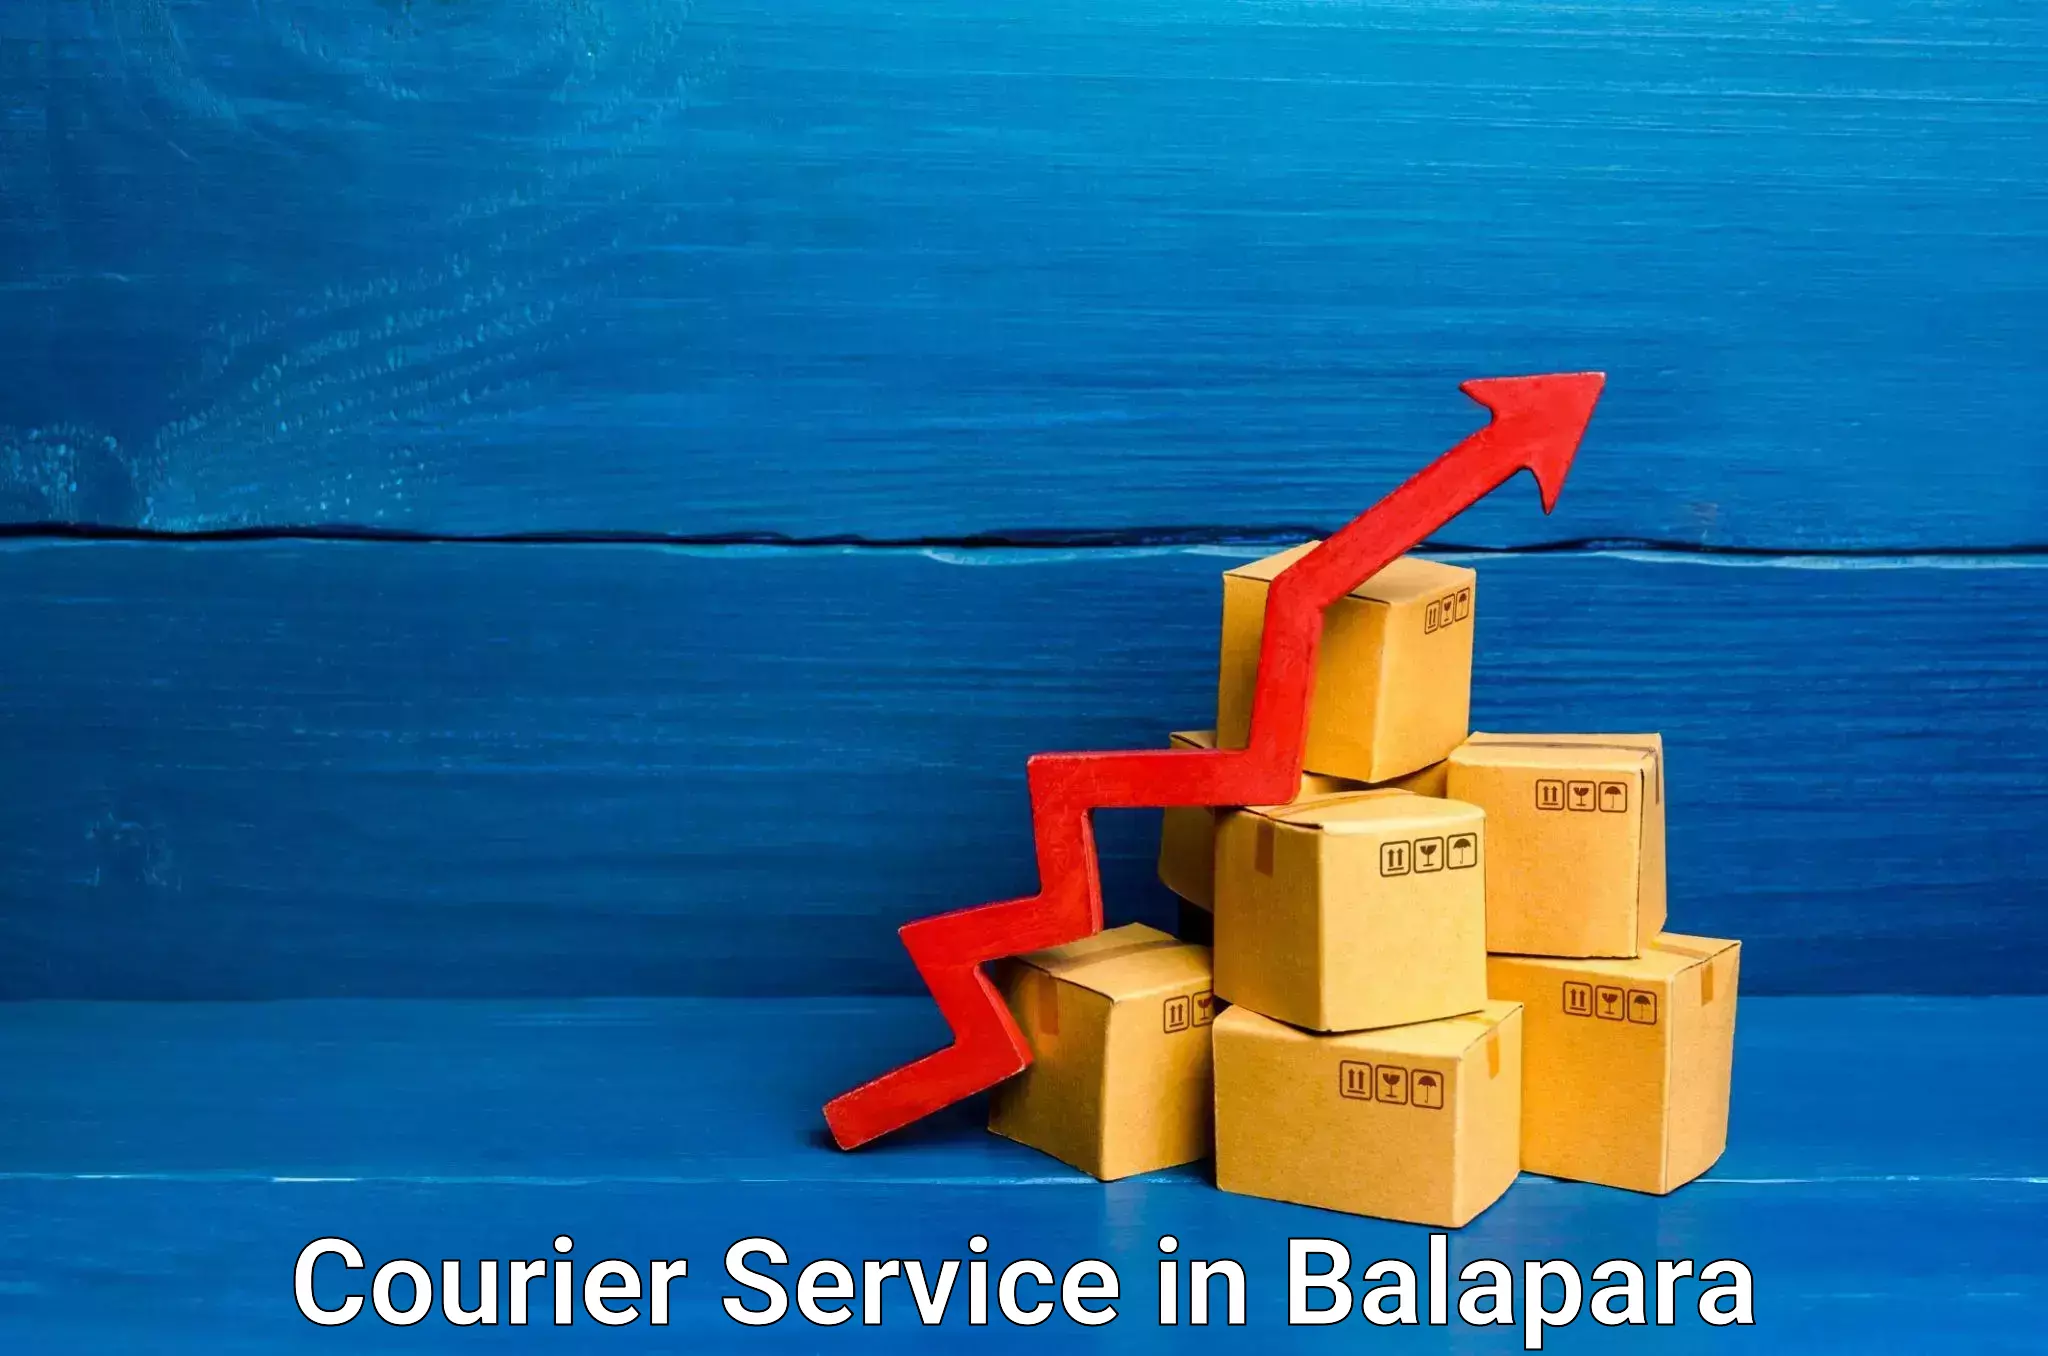 Customer-focused courier in Balapara